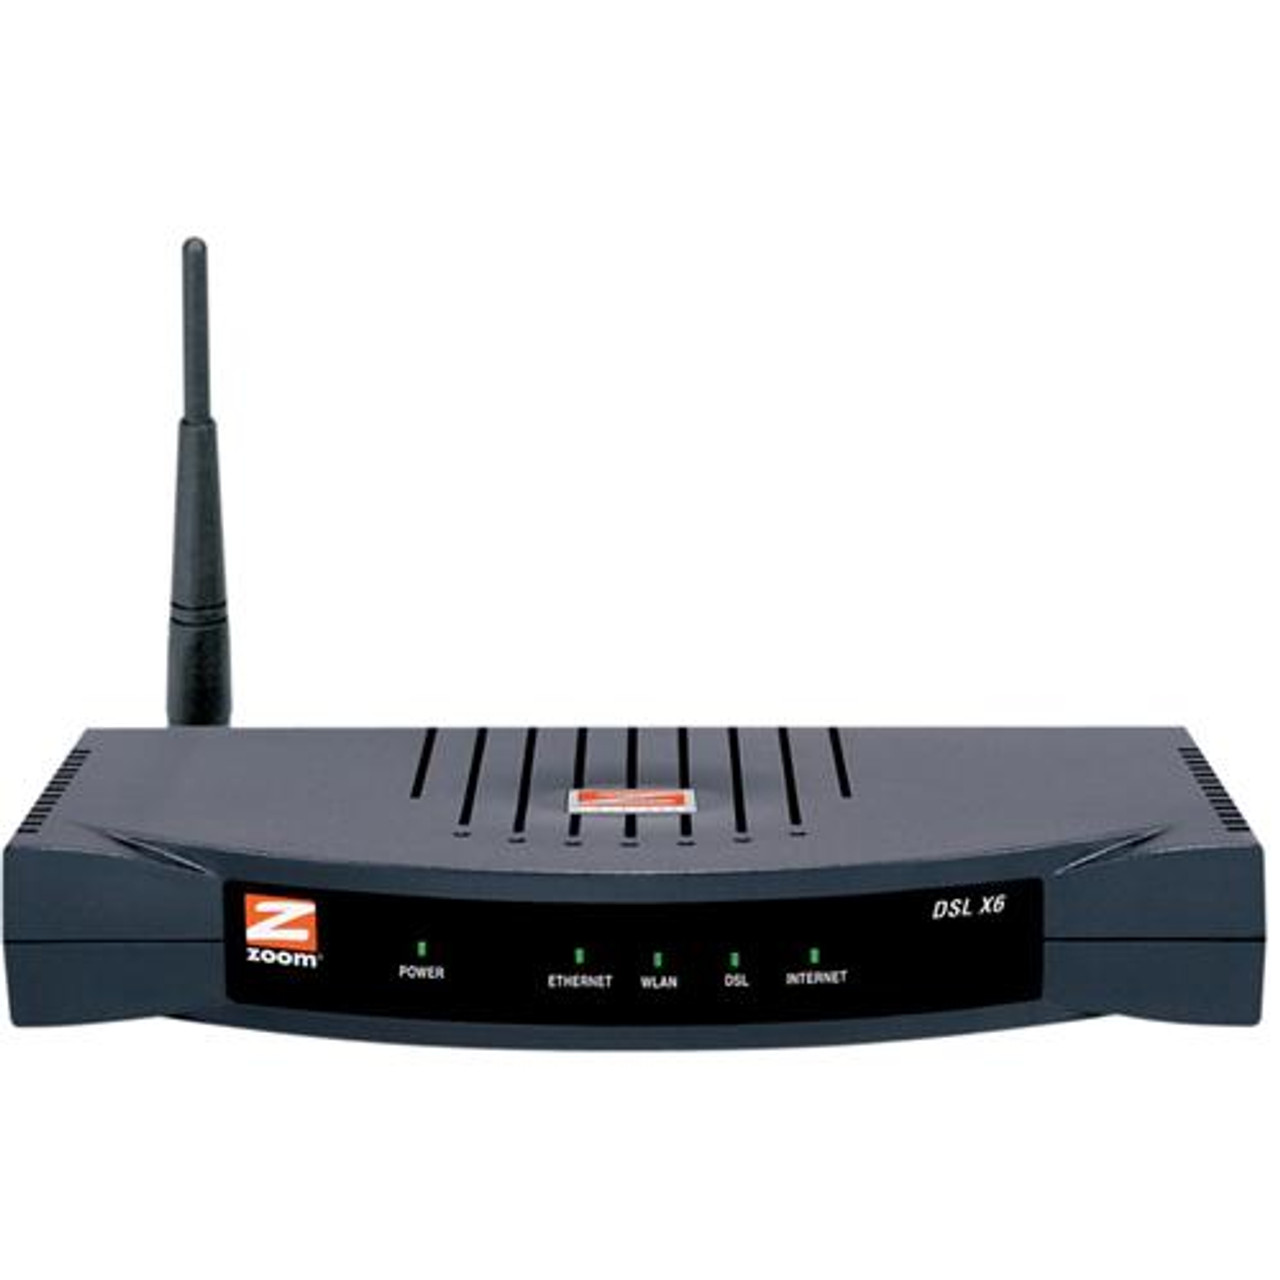 5590-00-00HF Zoom 5590 Wireless Broadband Router 125 Mbps 4 x 10/100Base-TX Network LAN 1 x ADSL Network WAN IEEE 802.11b/g (Refurbished)